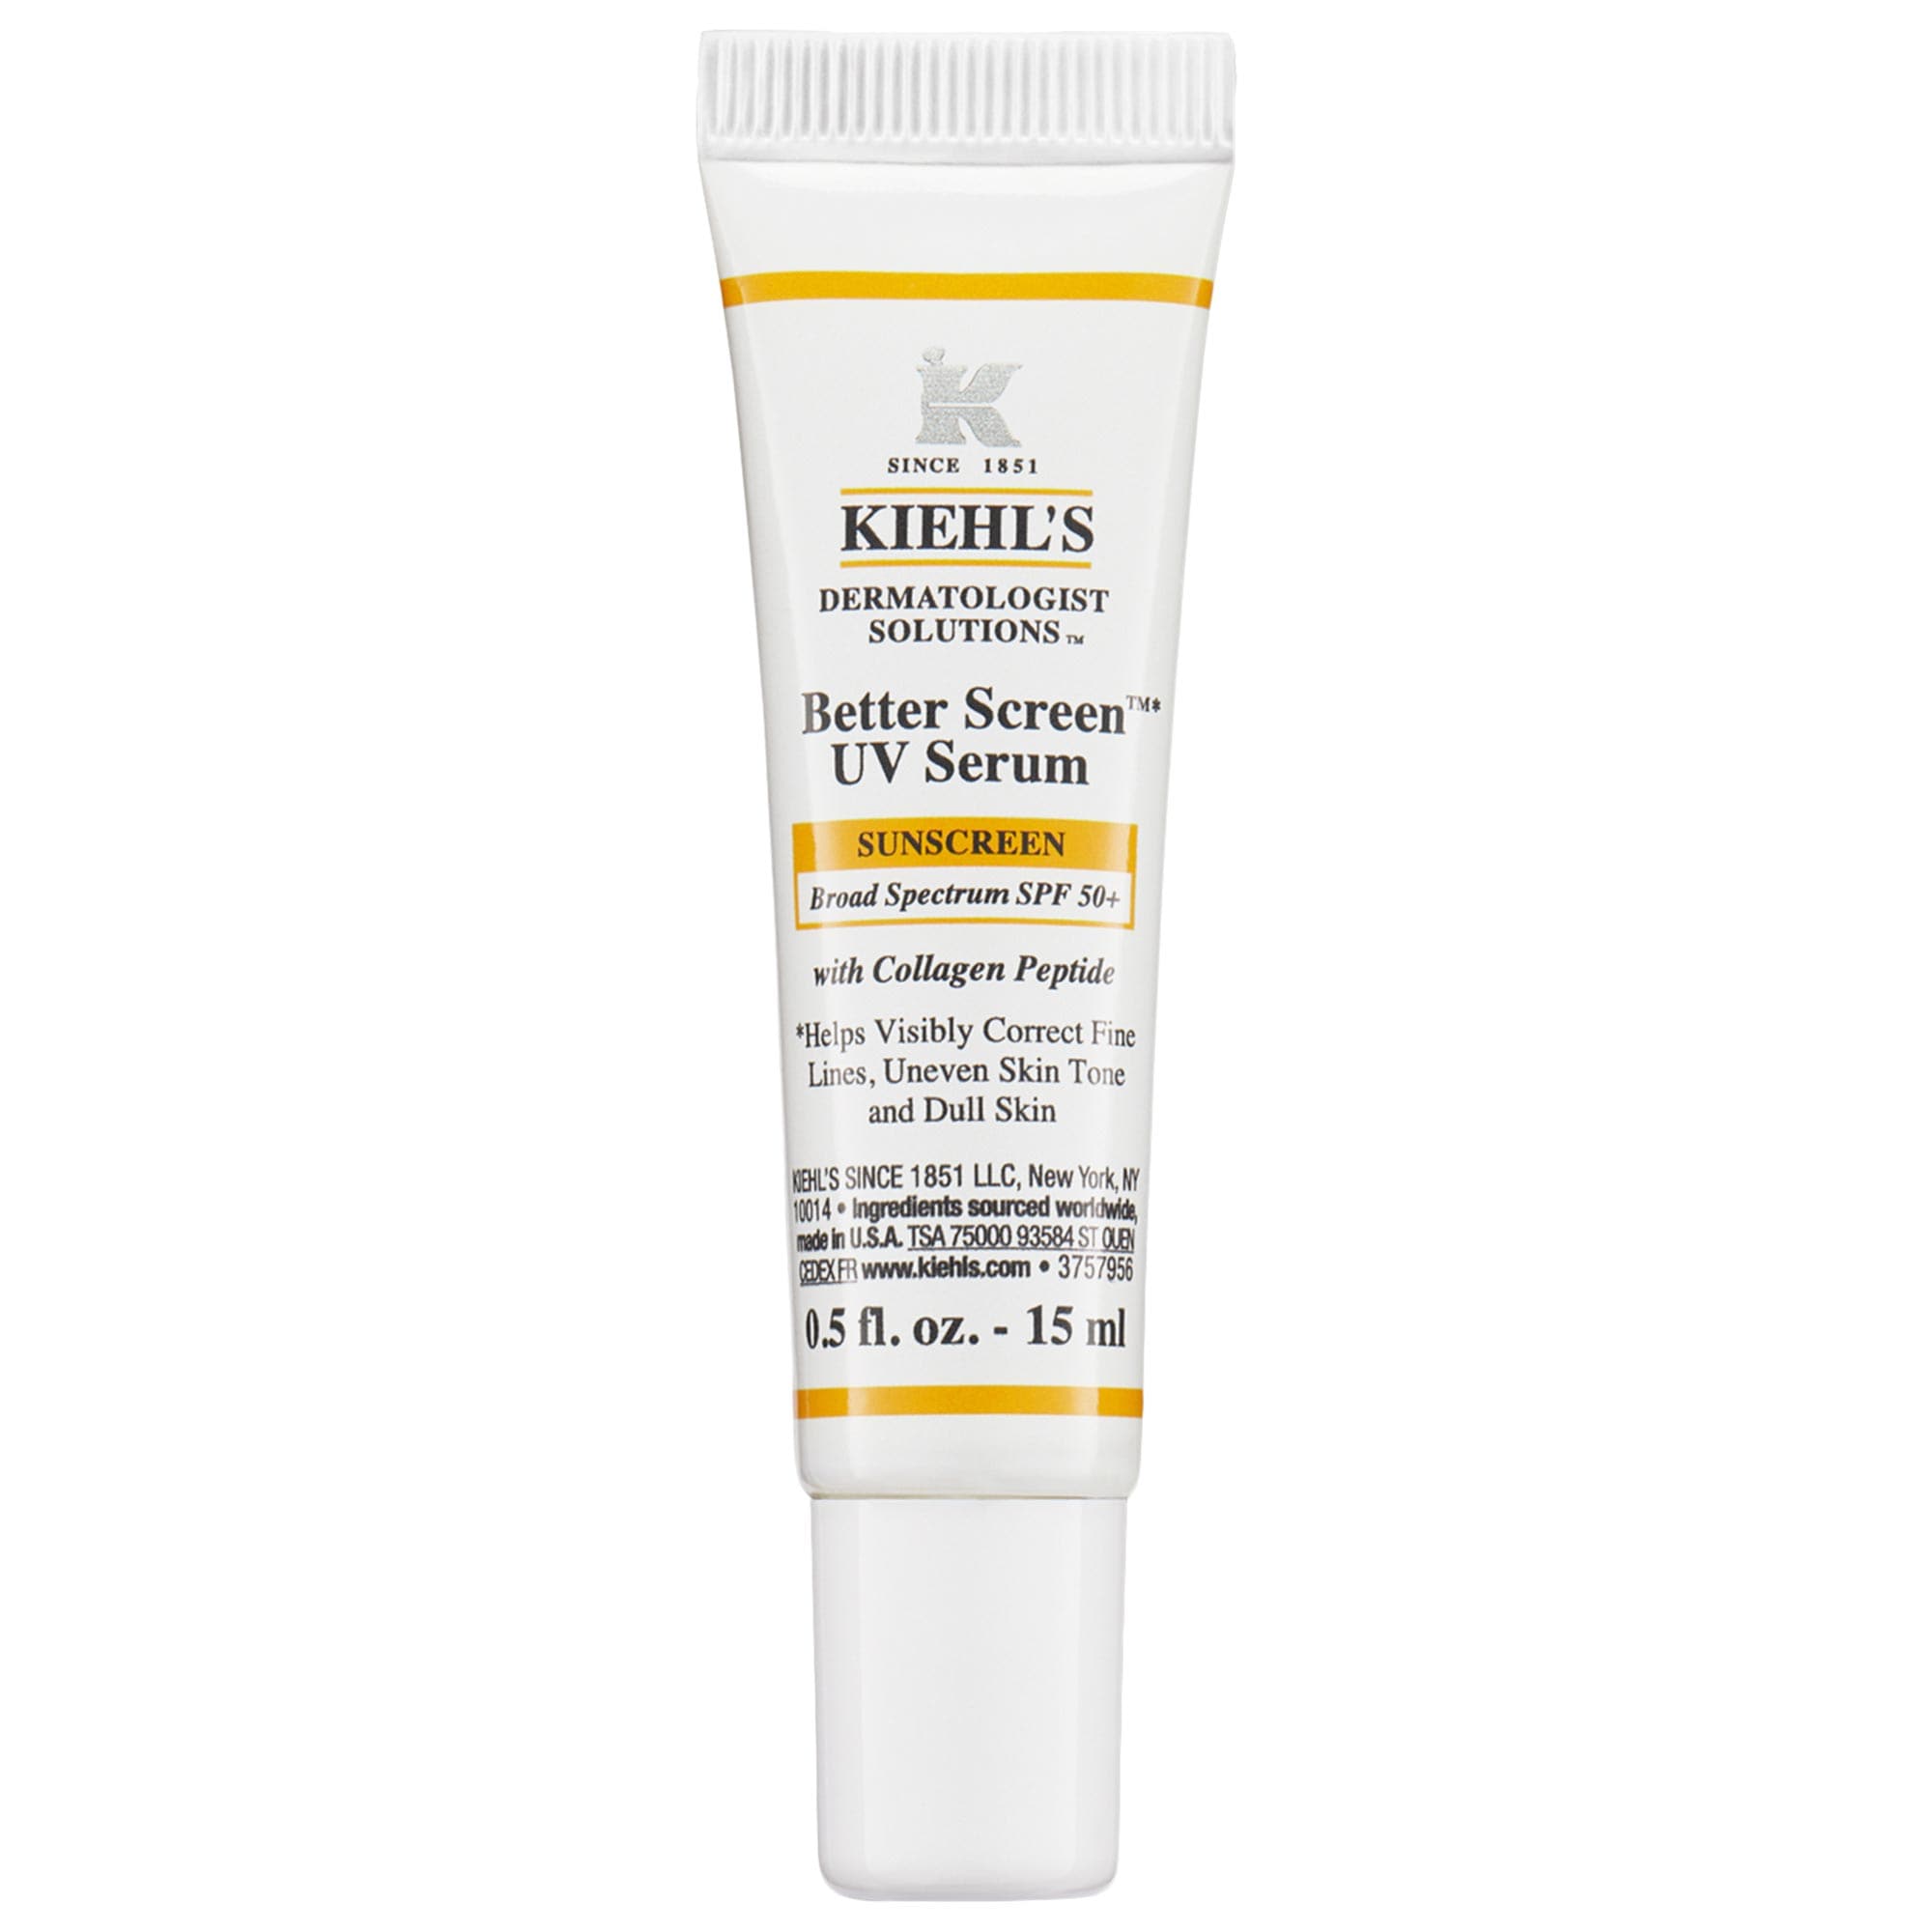 Better Screen™ UV Serum SPF 50+ Facial Sunscreen with Collagen Peptide Kiehl's Since 1851